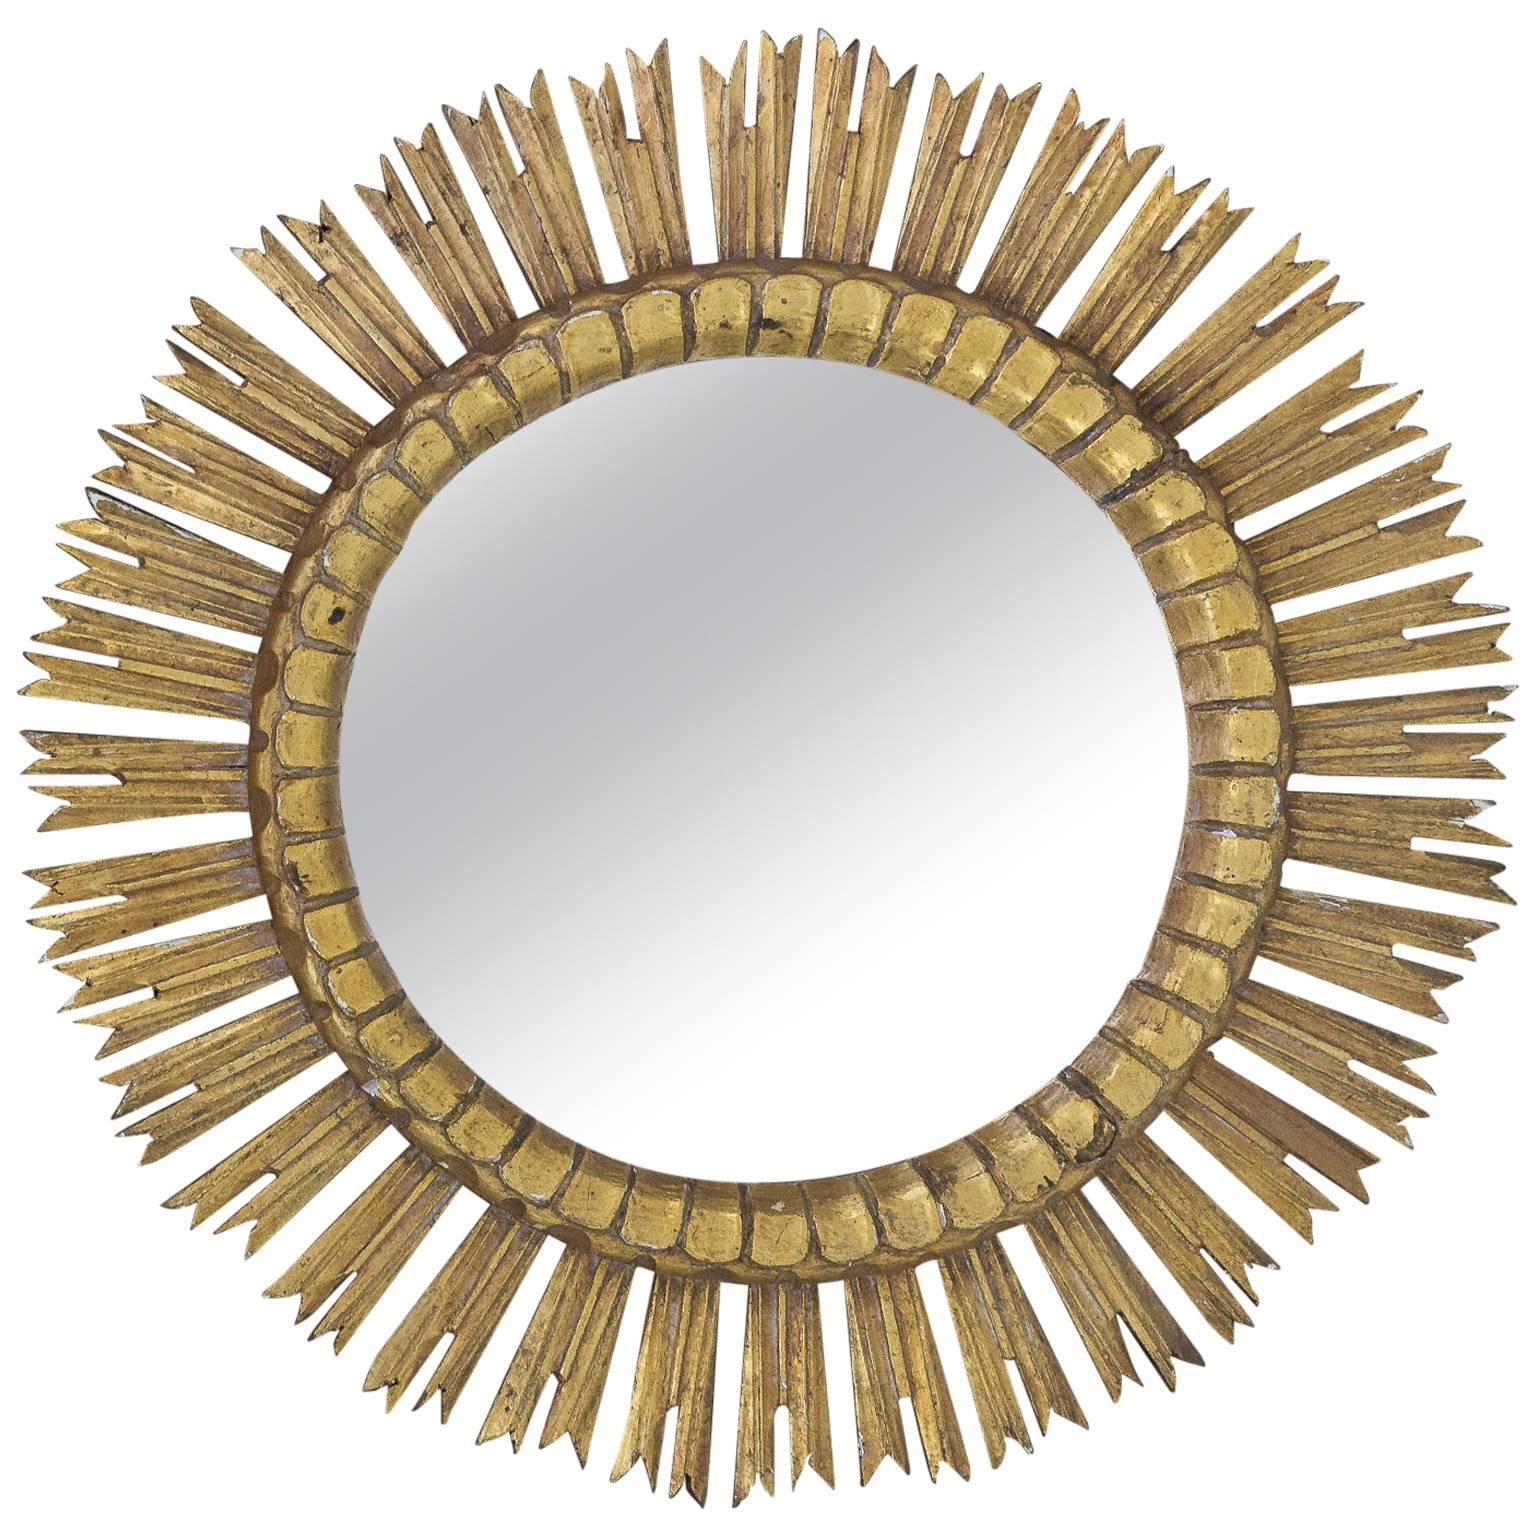 Spanish Giltwood Sunburst Mirror with Carved Frame